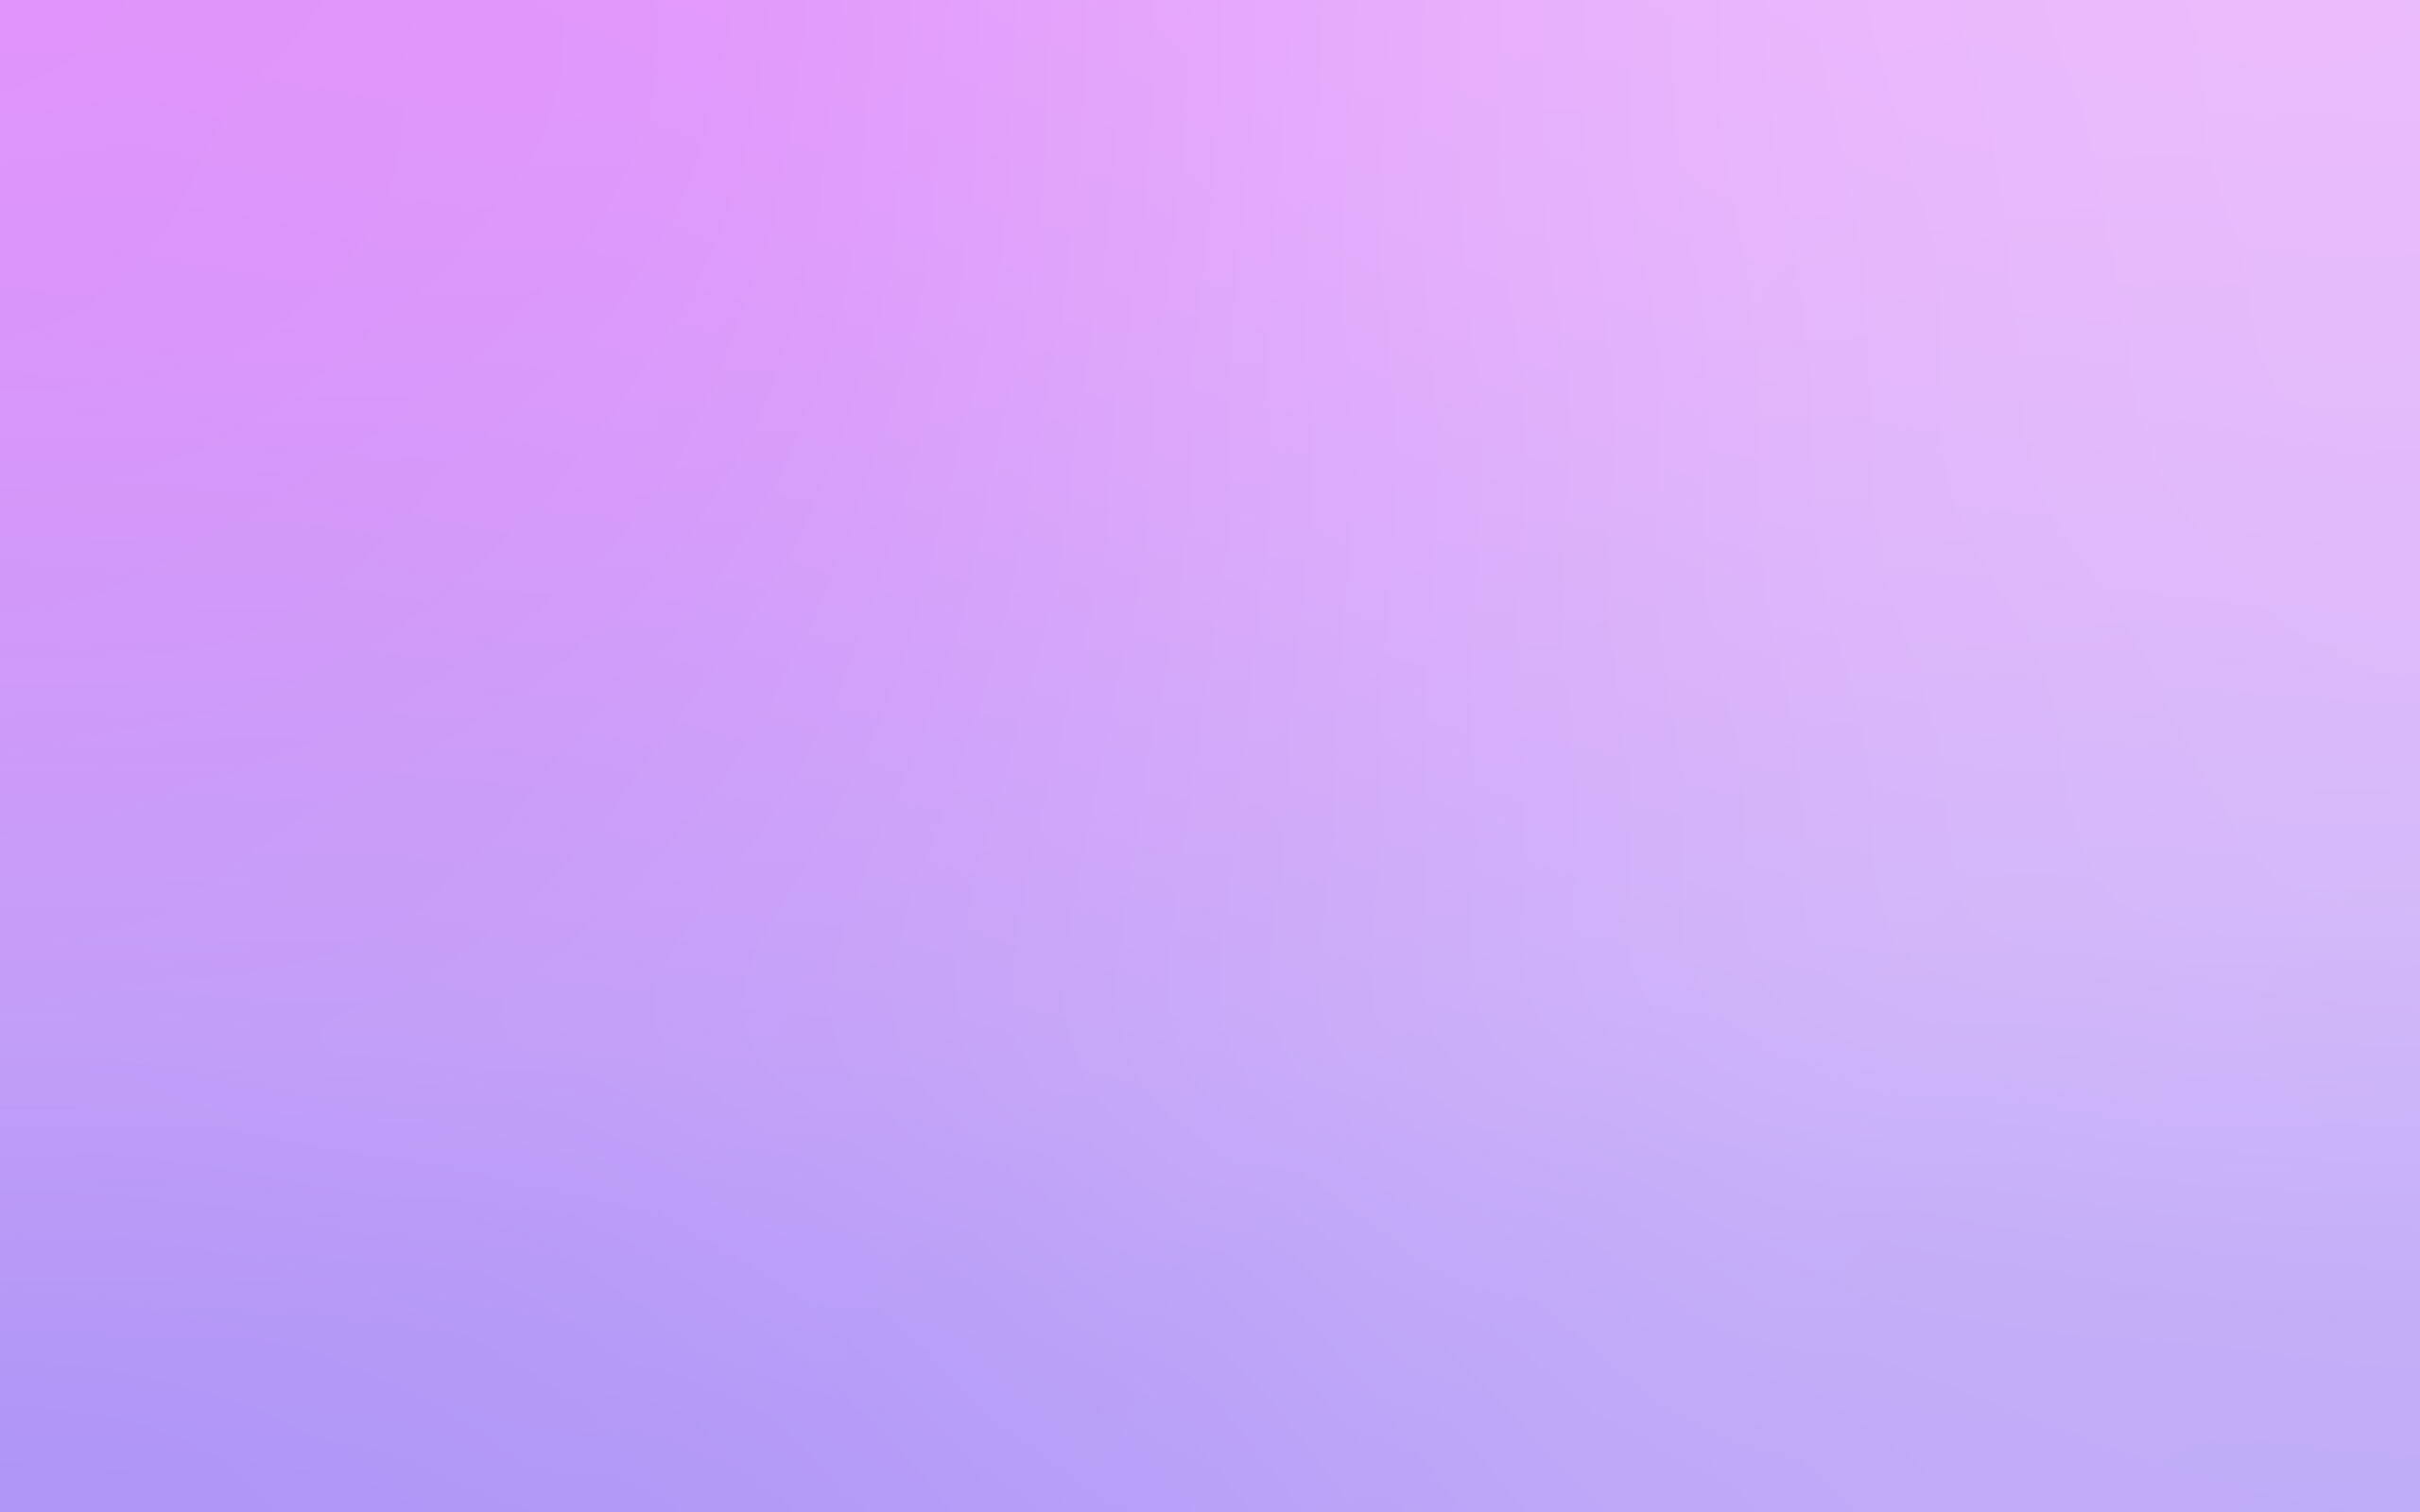 A purple and blue gradient background - Pastel purple, light purple